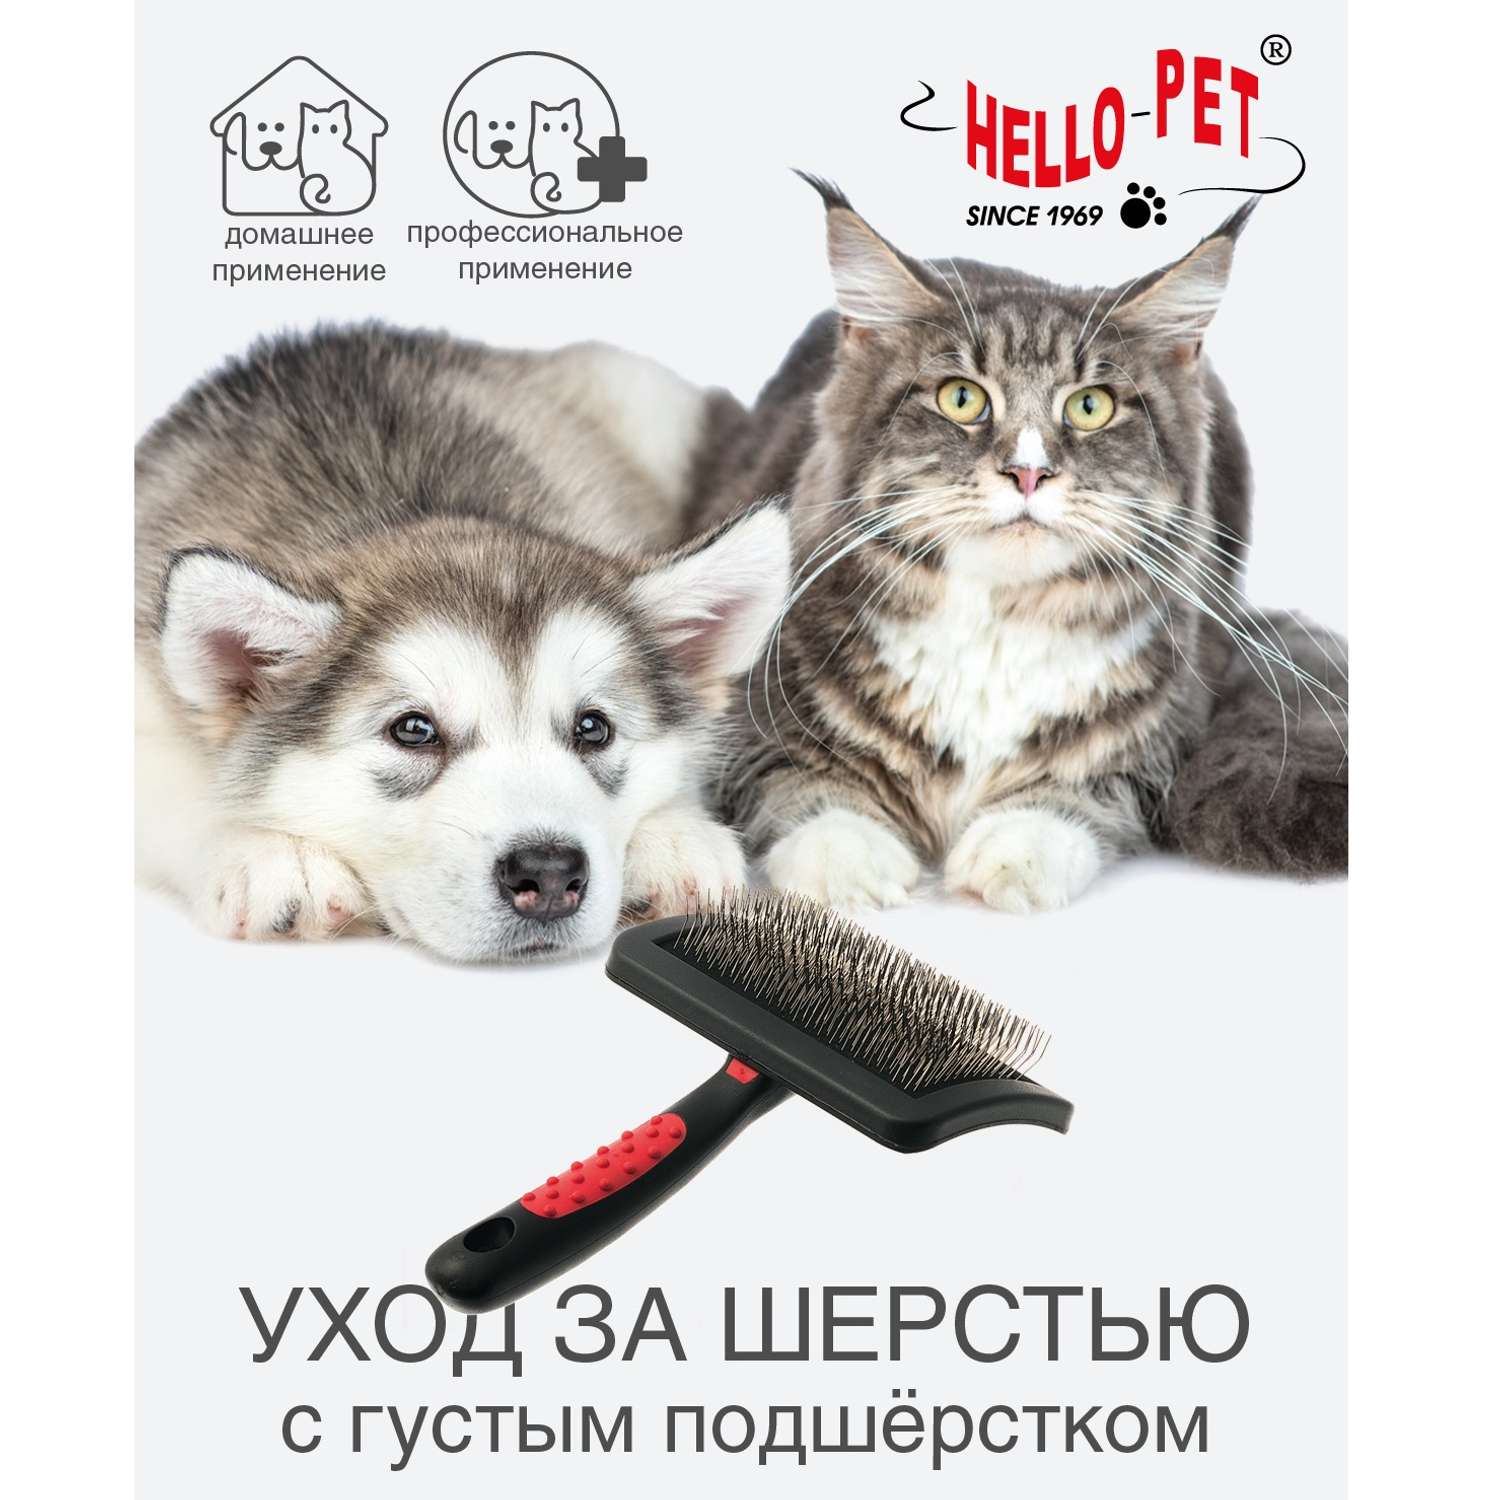 Пуходерка Hello Pet для животных средняя - фото 2